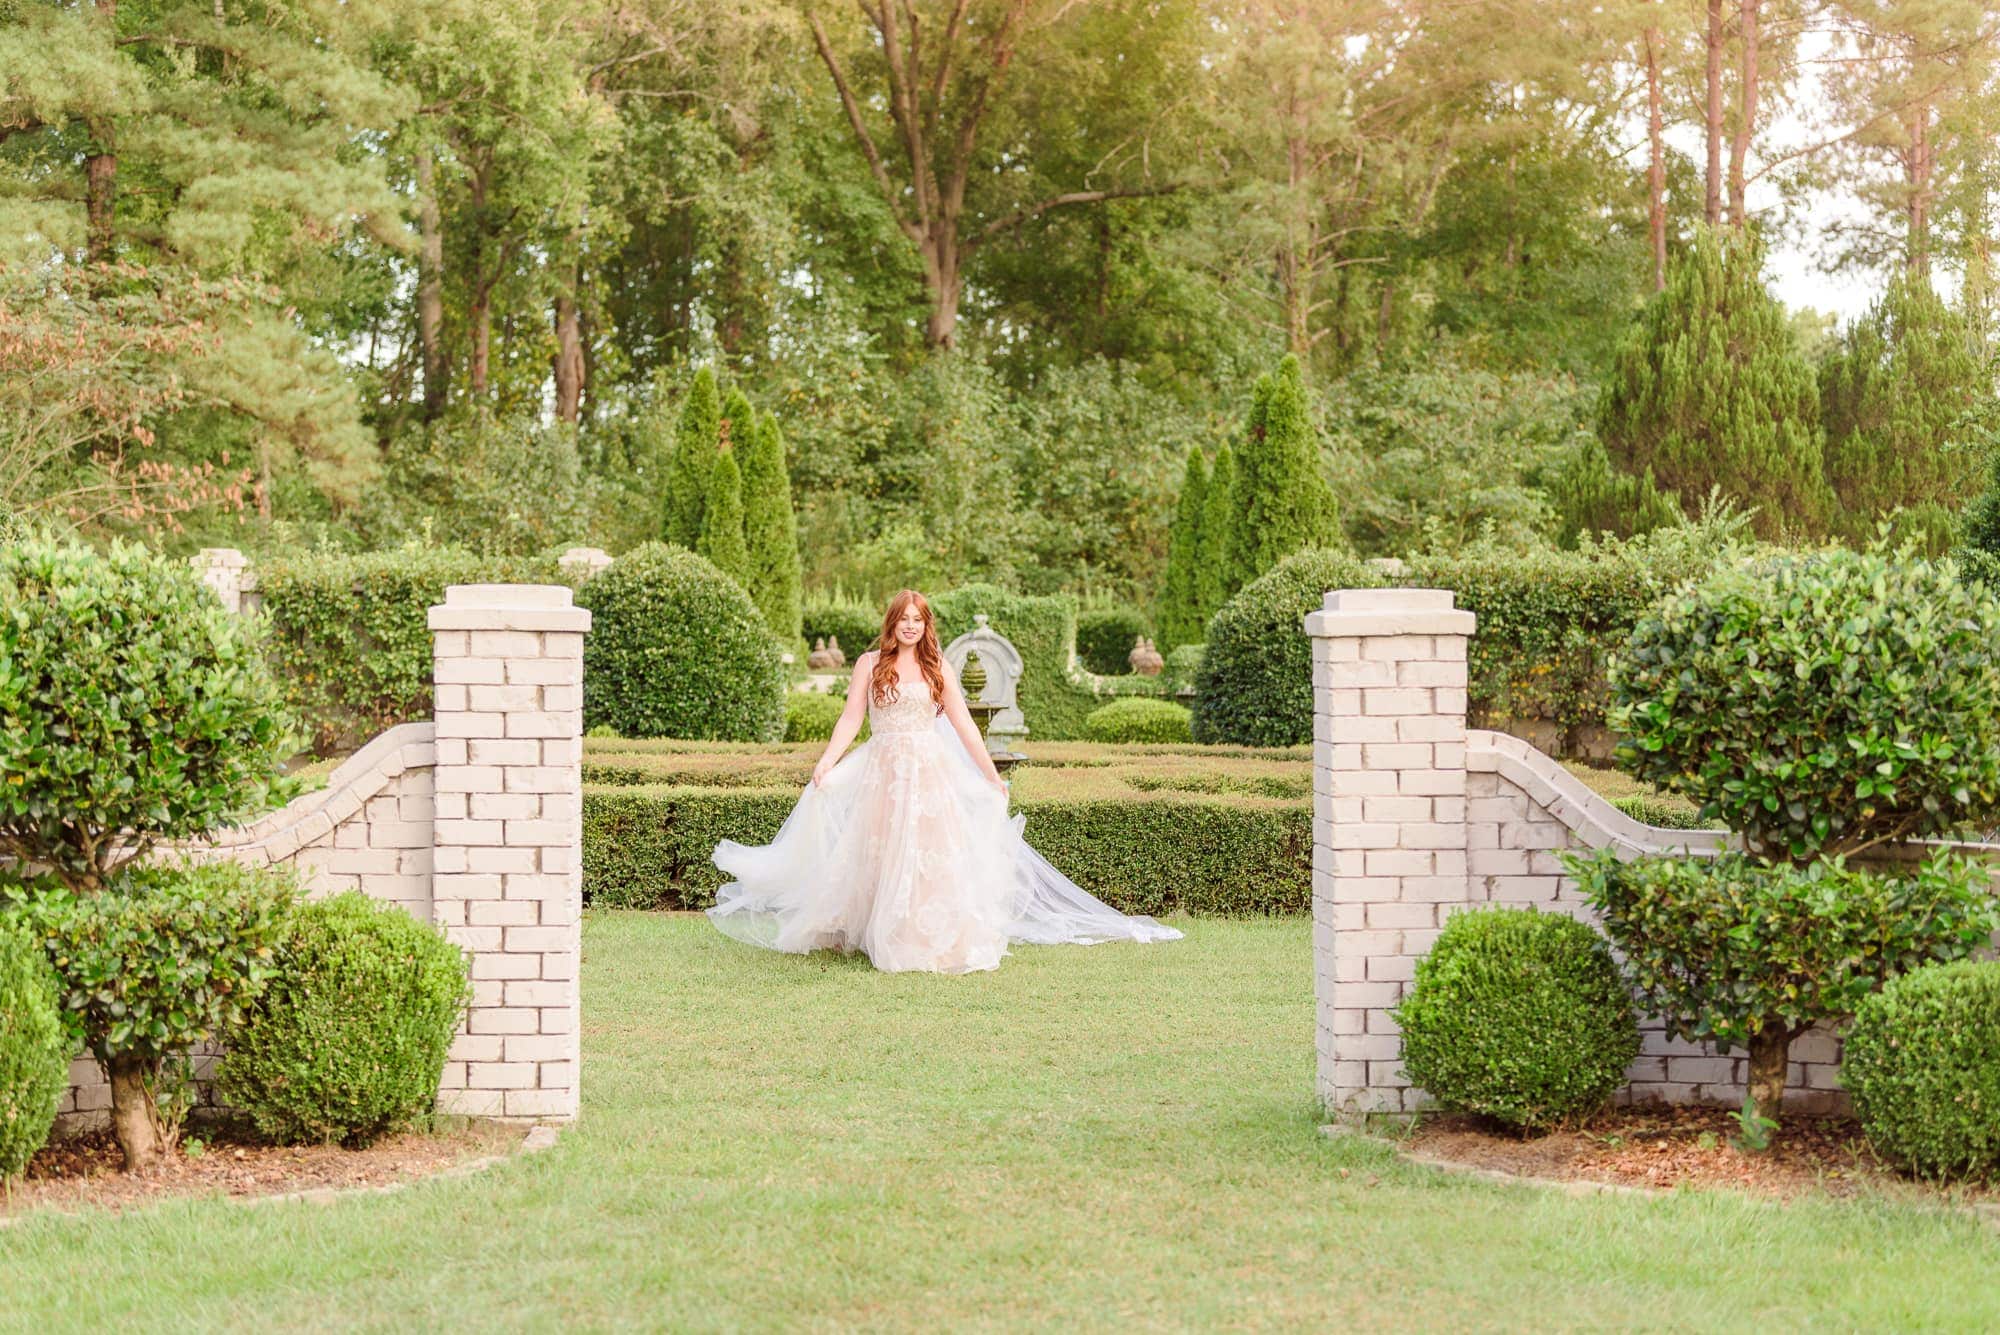 Olivia walks through the white brick gate at Key Rose Estate in Fayetteville.